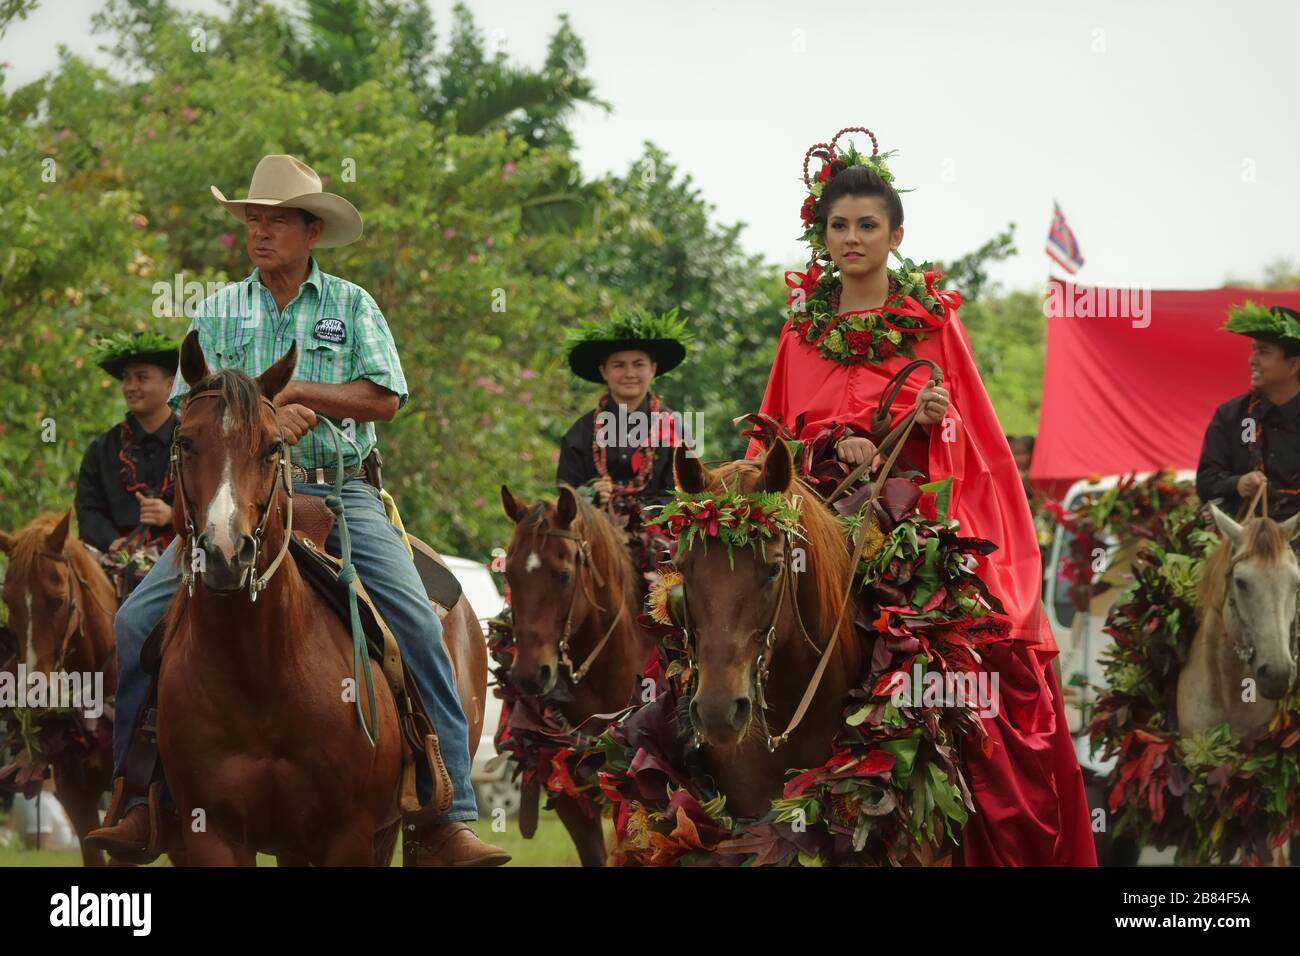 Lihue, Kauai, Hawaii / USA - June 9, 2018: A Pa‘u Princess, representing the island of Hawaii, rides on a horse at the annual King Kamehameha Parade. Stock Photo